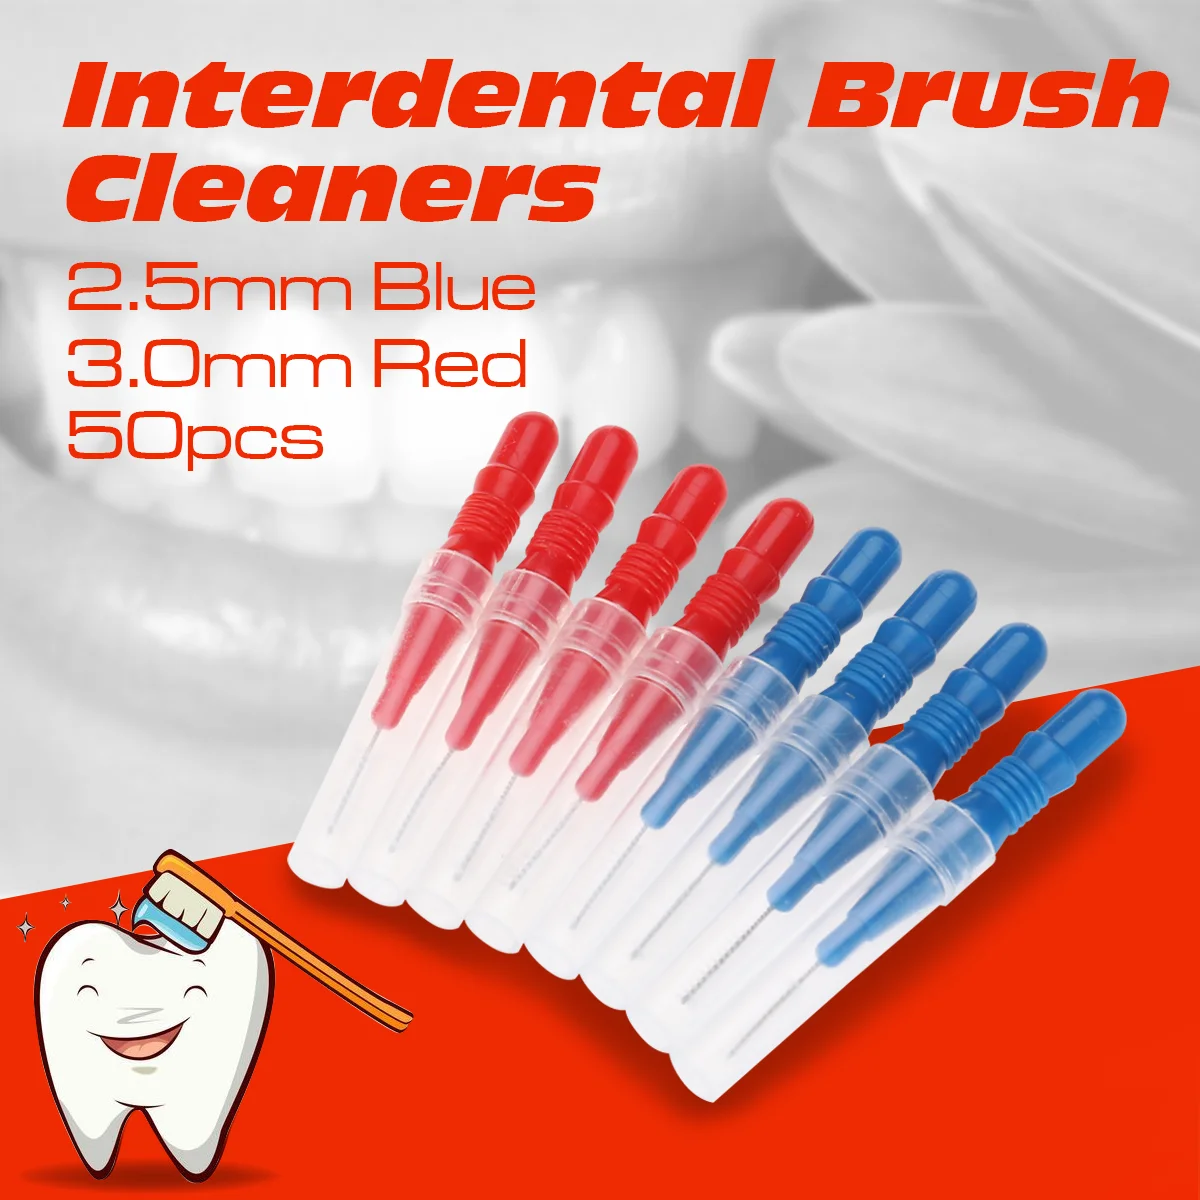 

50pcs Care Interdental Brush, Interdental Brush Picks Floss, Toothpick Between Brush